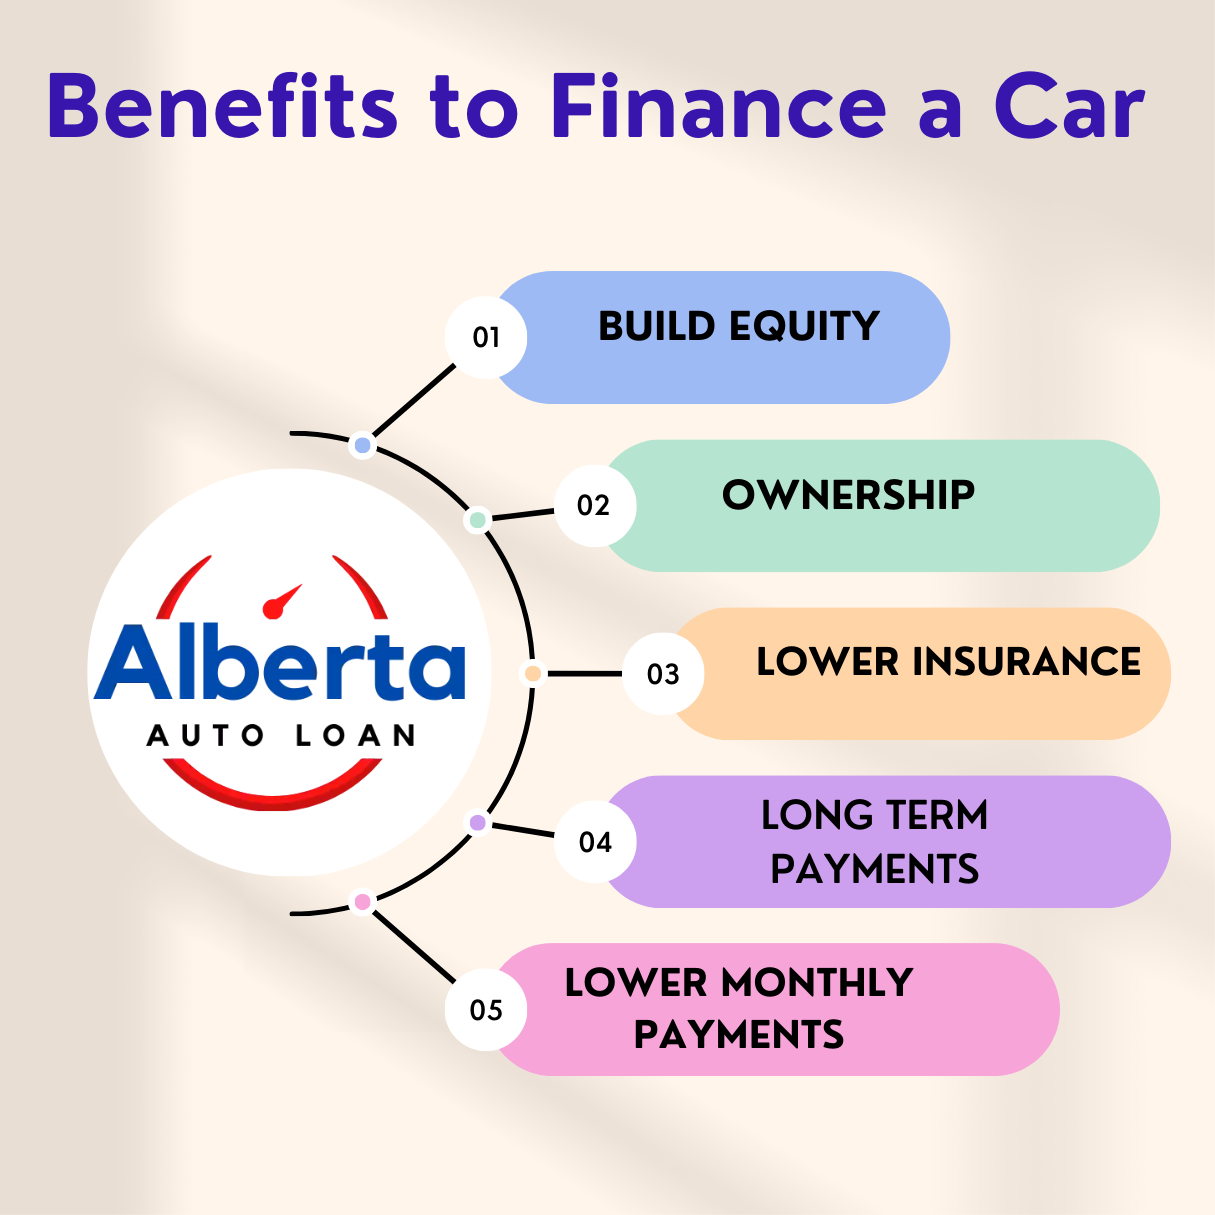 Benefits of financing a car through a dealership: